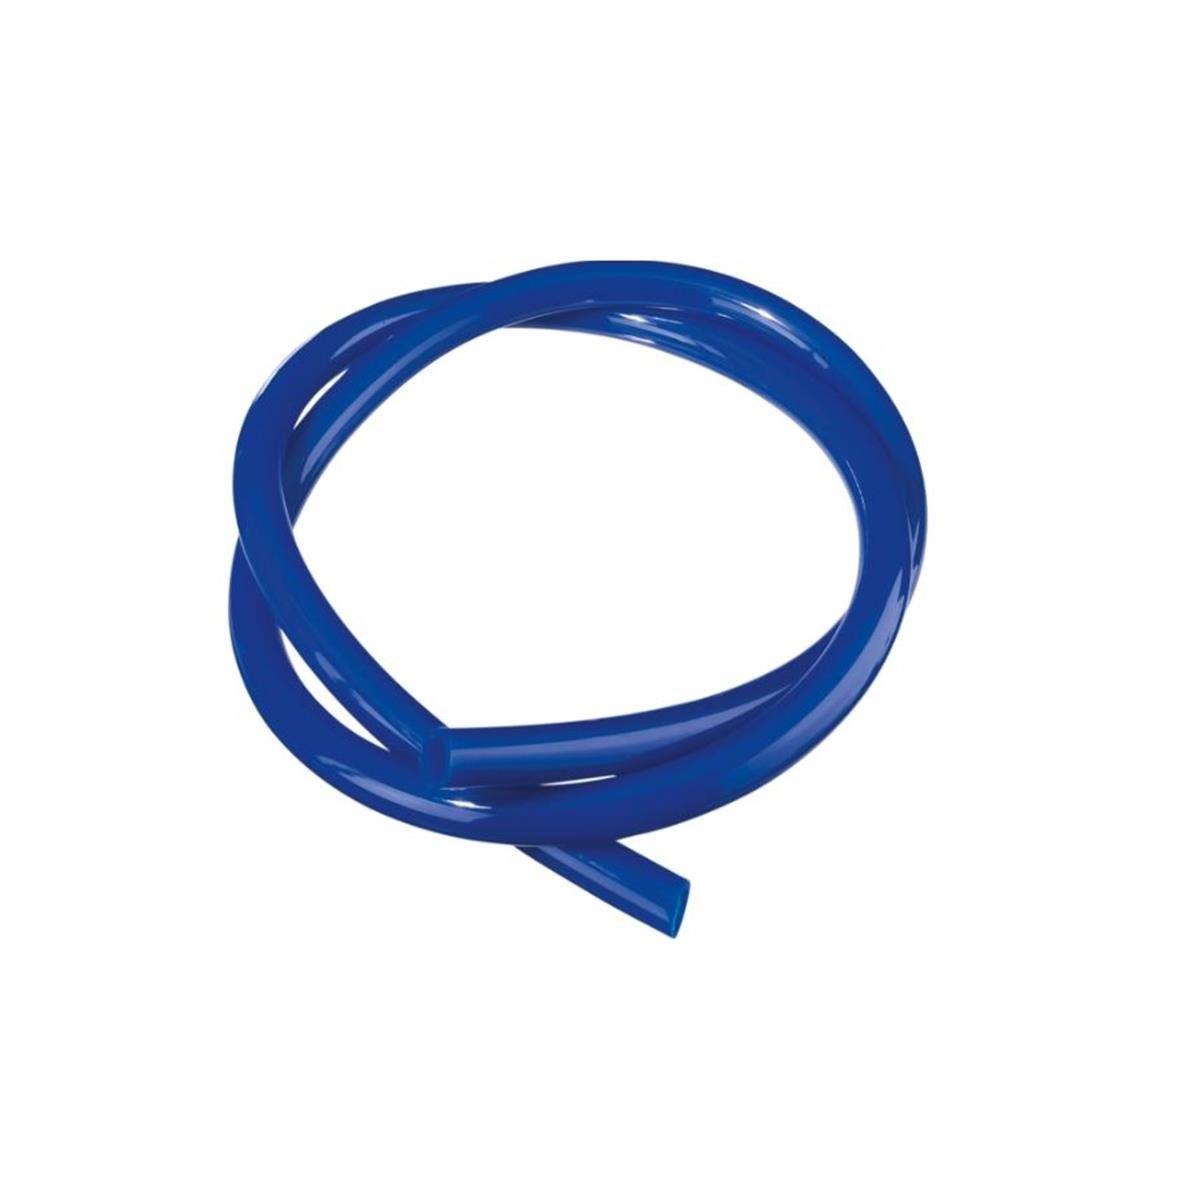 Moose Racing fuel hose 6.4 mm Blue, 91 cm long